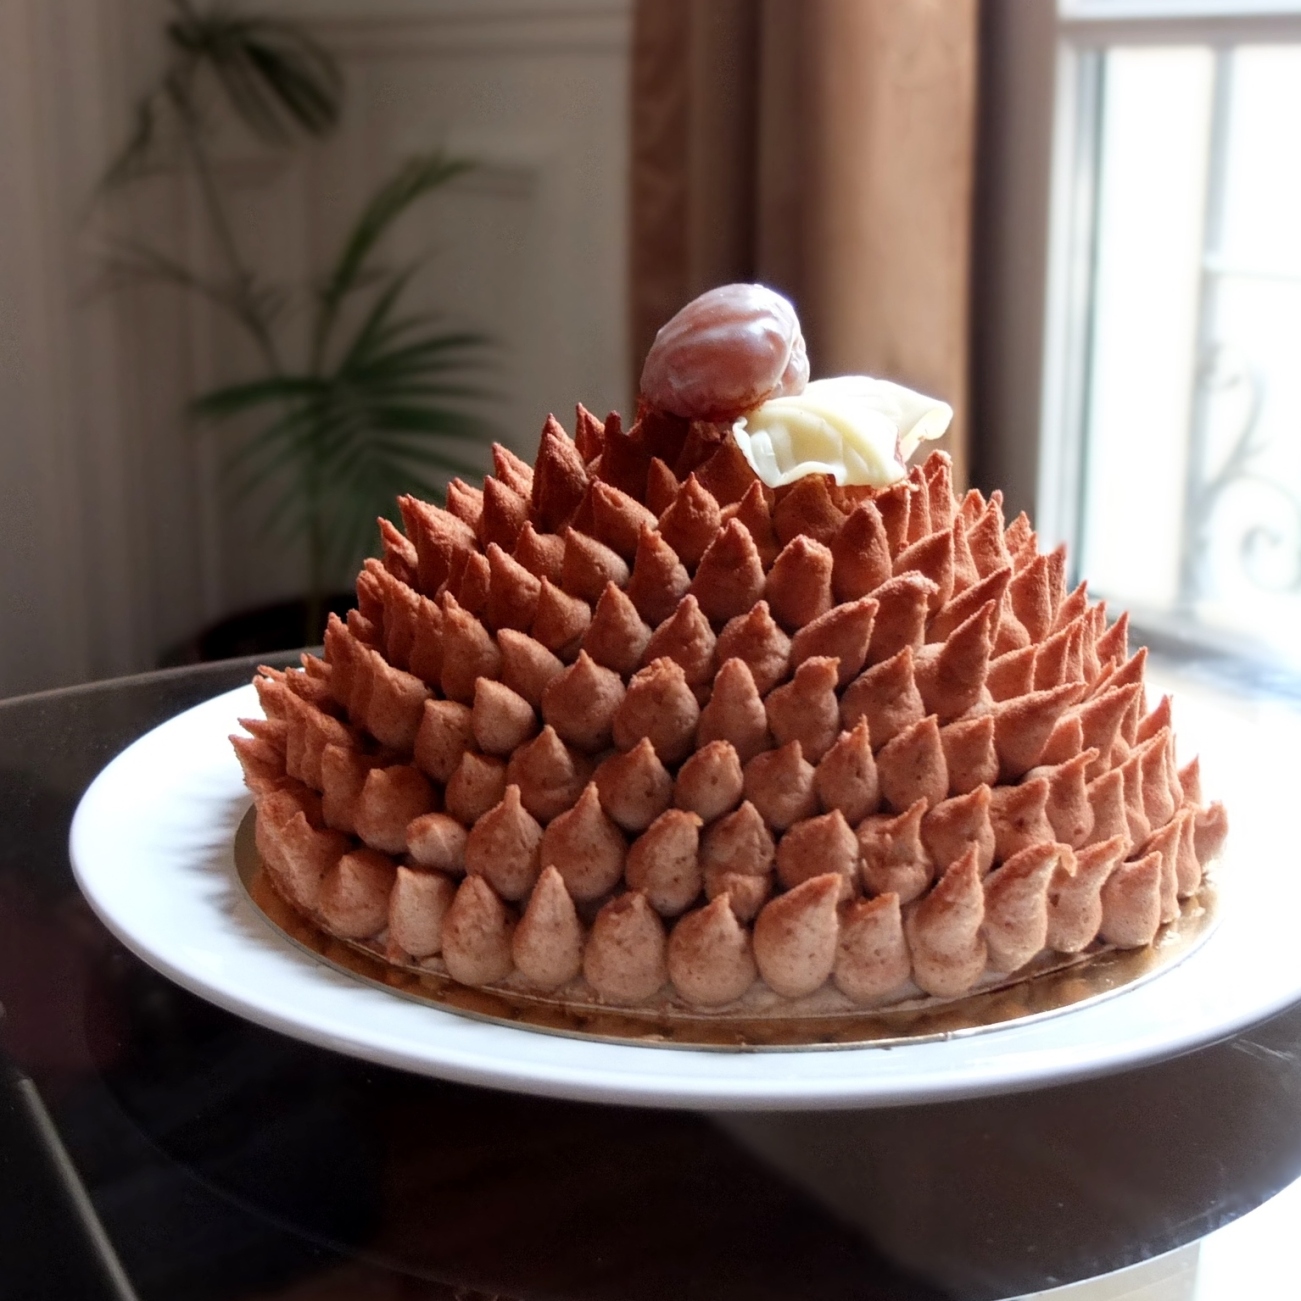 Chestnut hedgehog cake